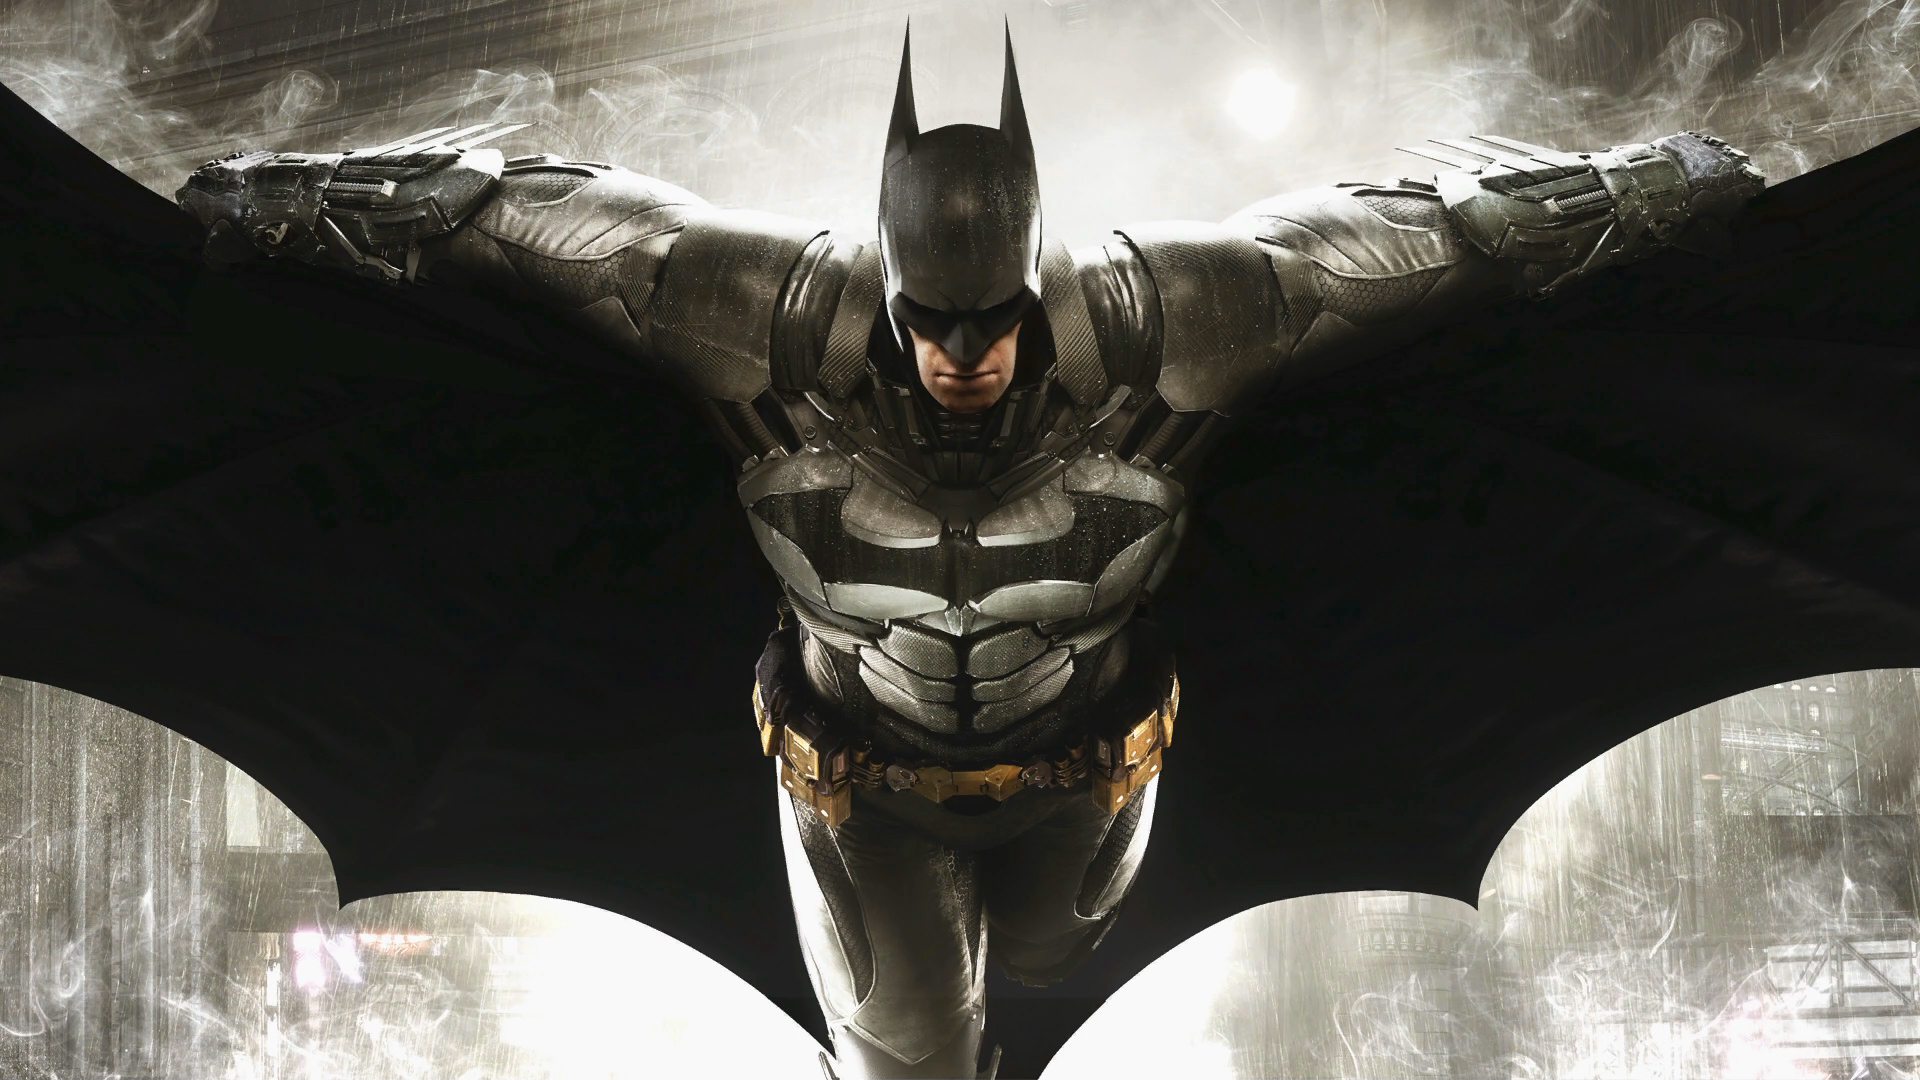 Live wallpaper Batman Arkham knight / download to desktop